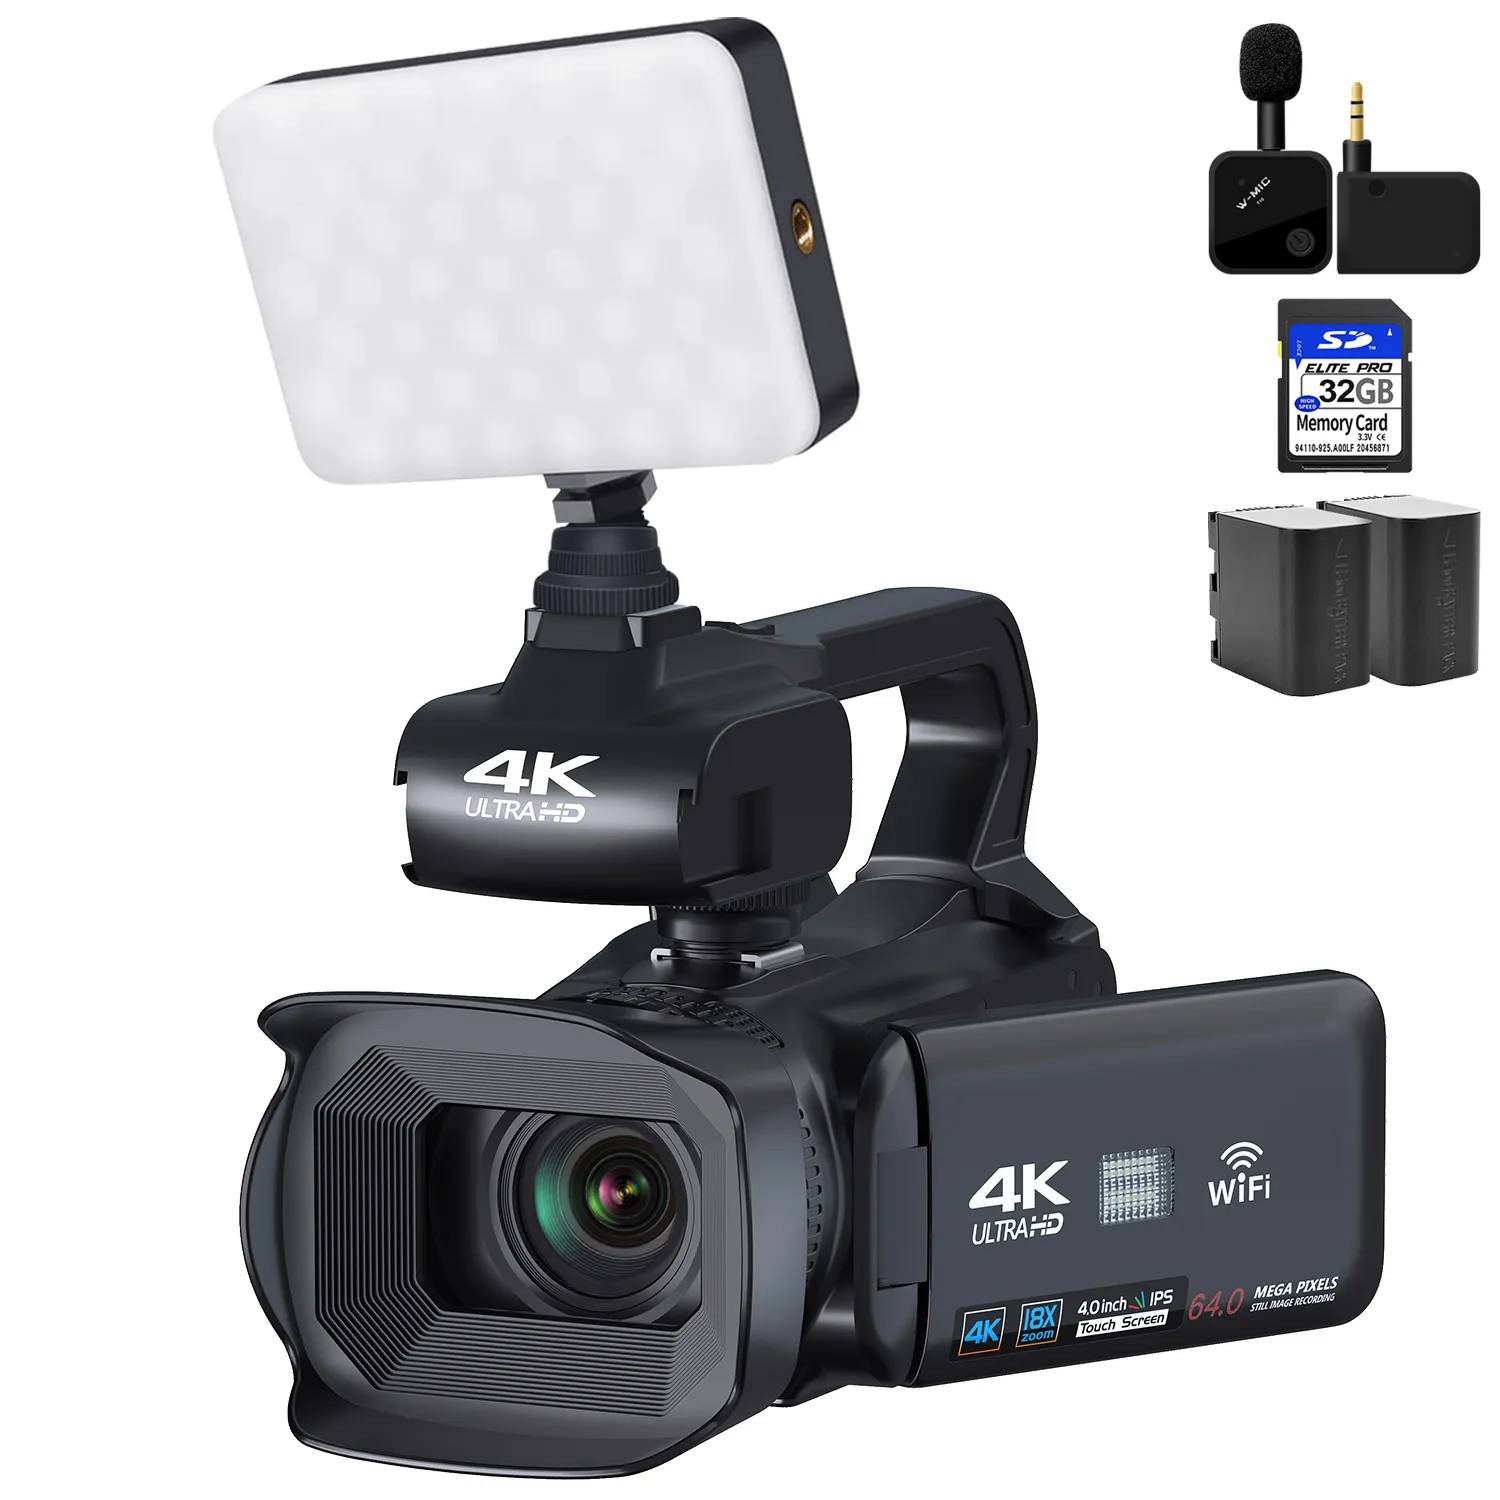 4K High Definition Dual lens for Selfies Digital Video Camera 48 Megapixels Still Camcorder Waterproof